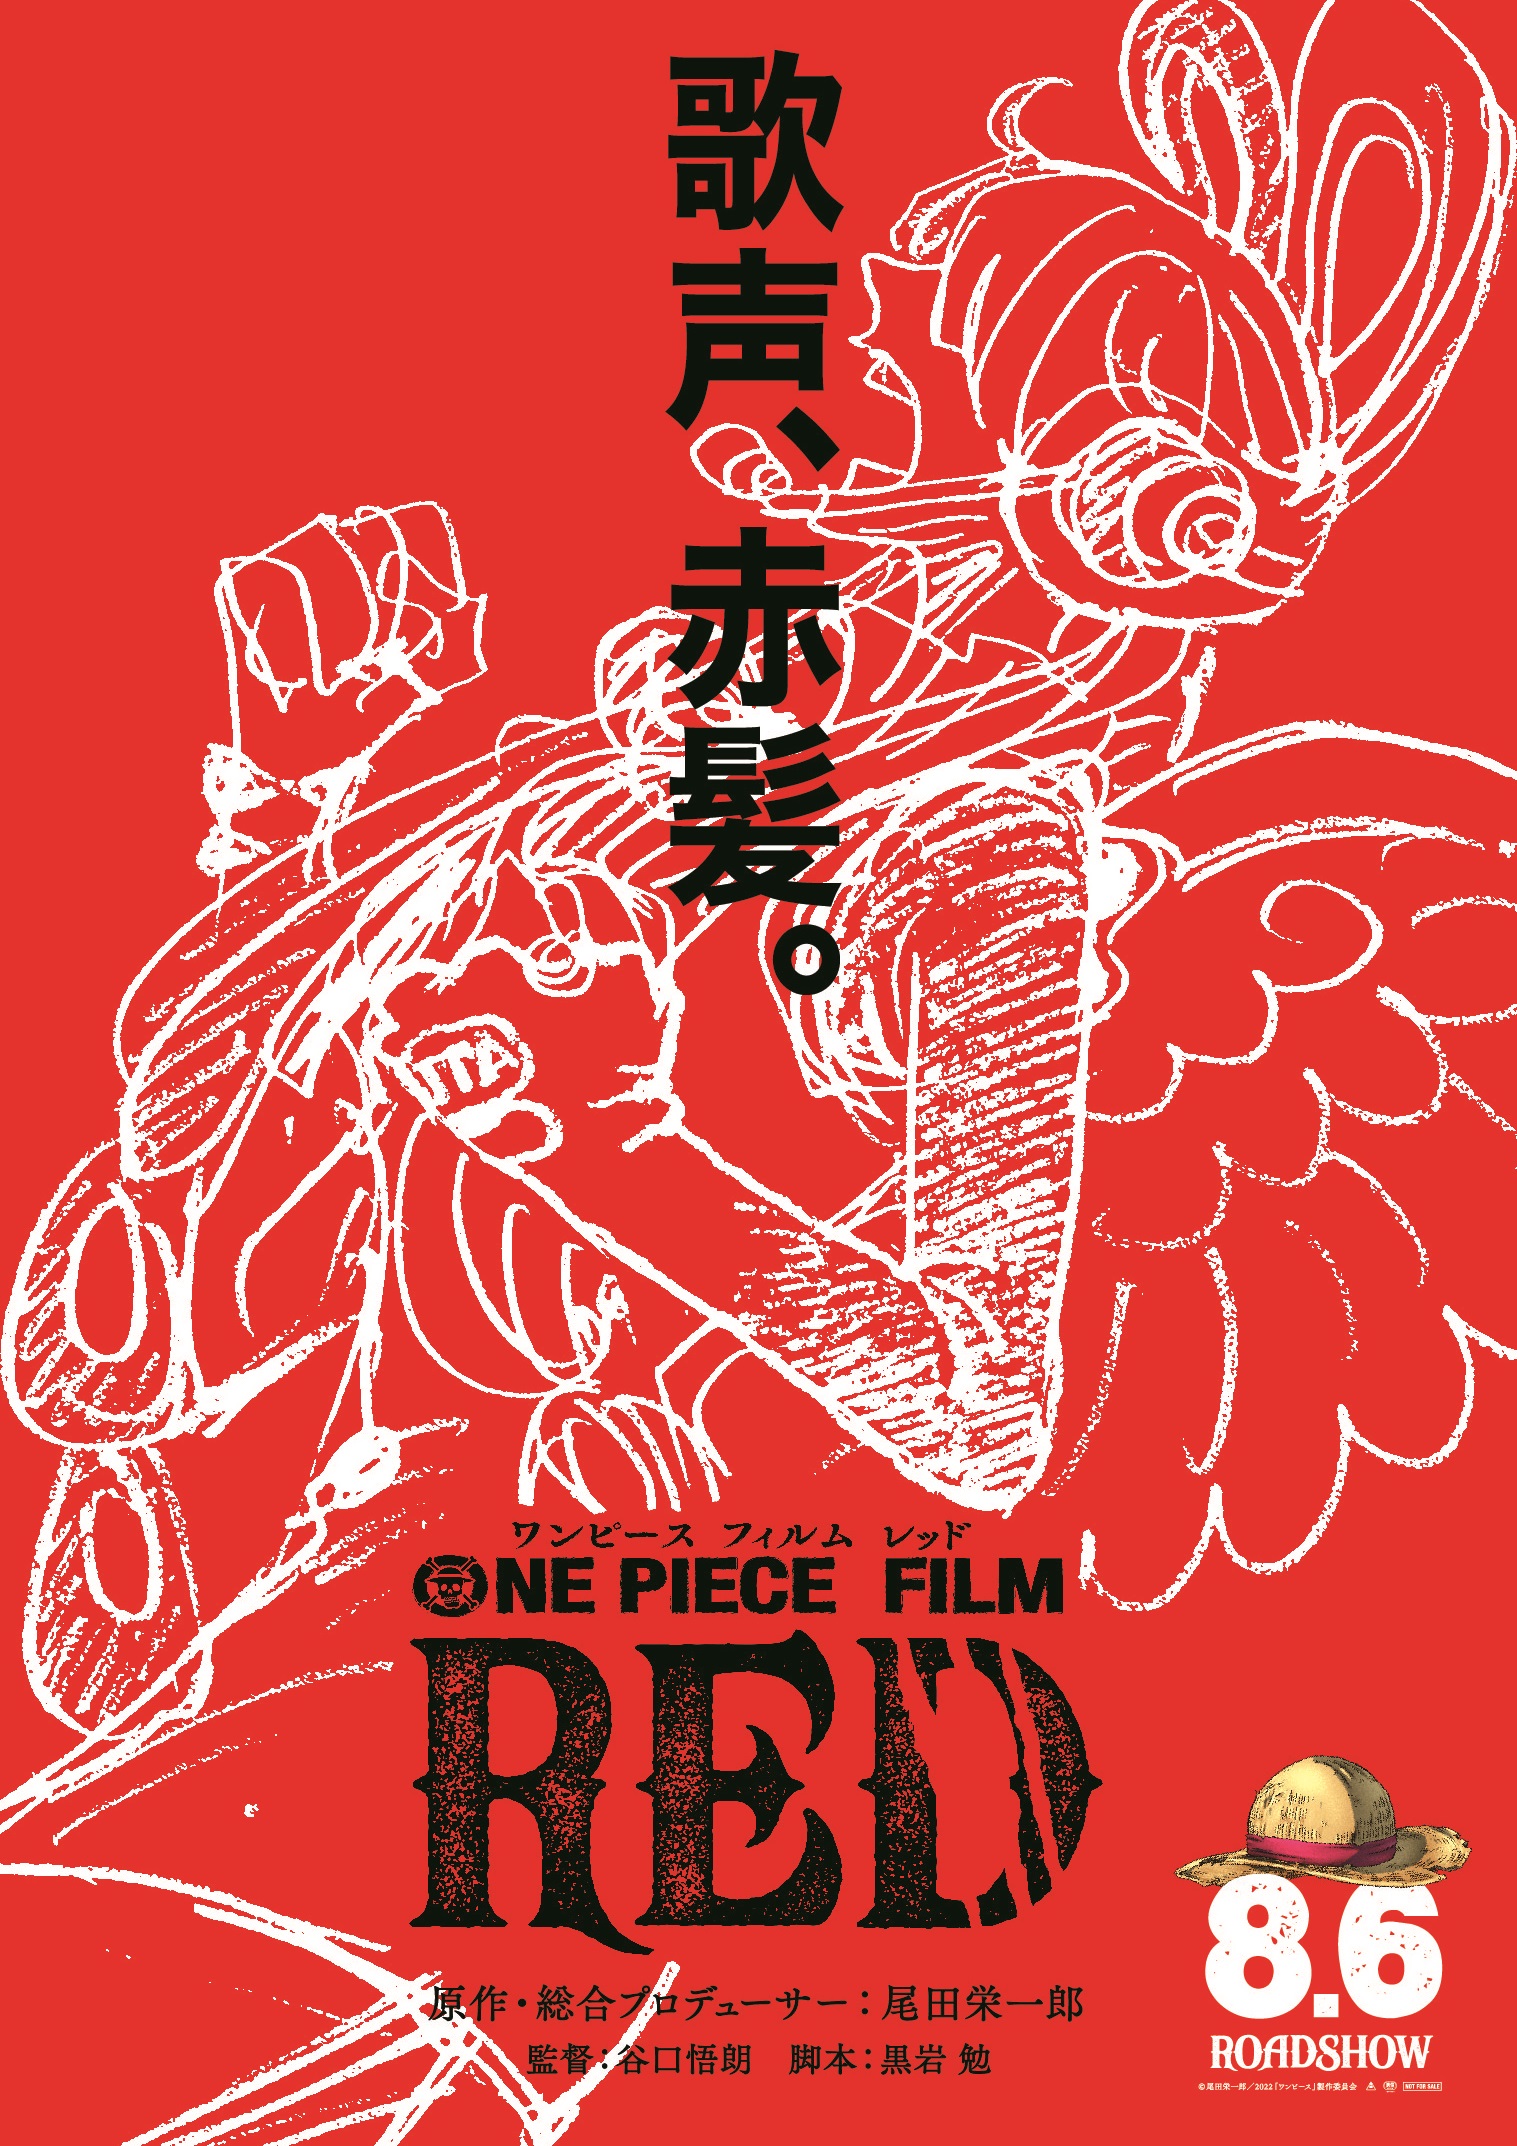 『ONE PIECE FILM RED』
公開日・超特報・ティザービジュアル解禁